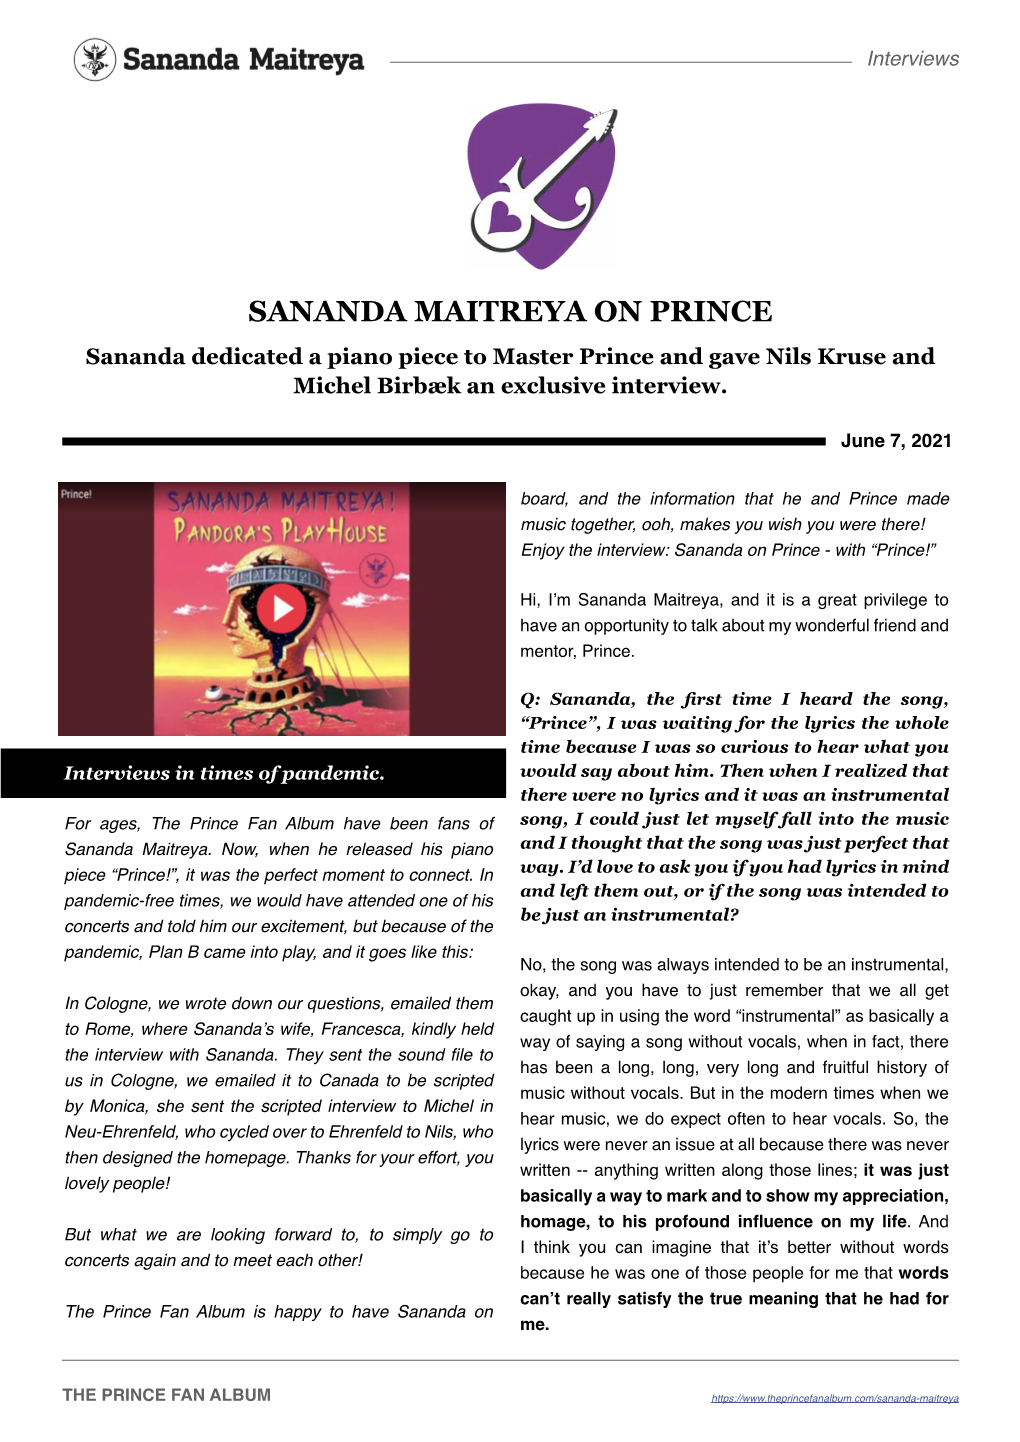 THE PRINCE FAN ALBUM – Sananda Maitreya on Prince